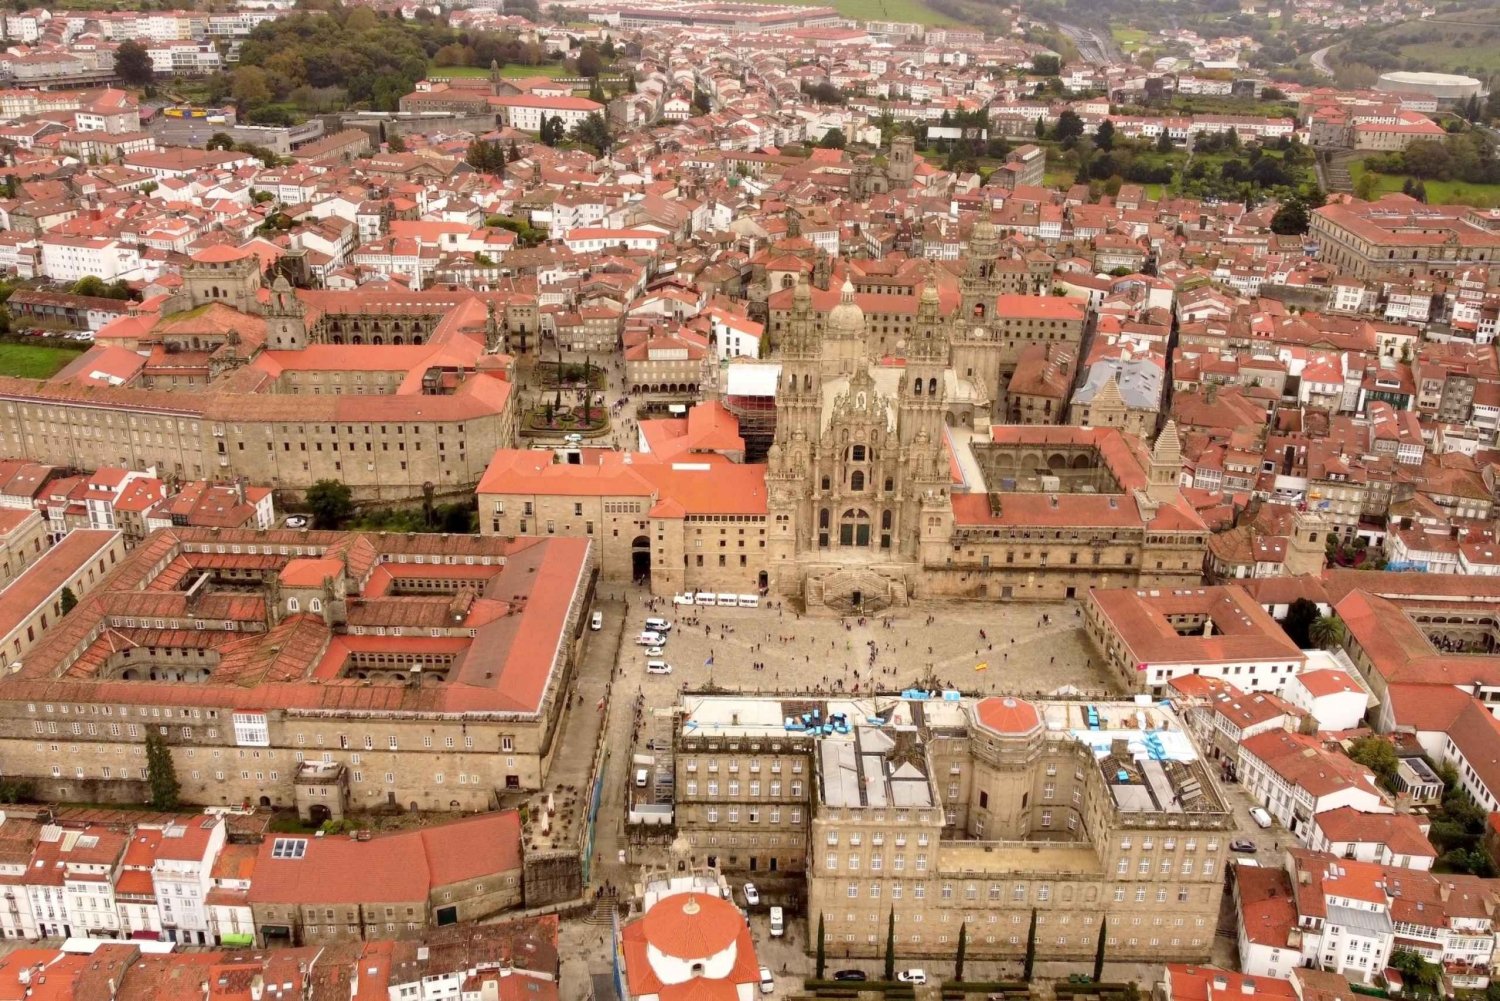 From Porto: Santiago de Compostela Cathedral Private Tour